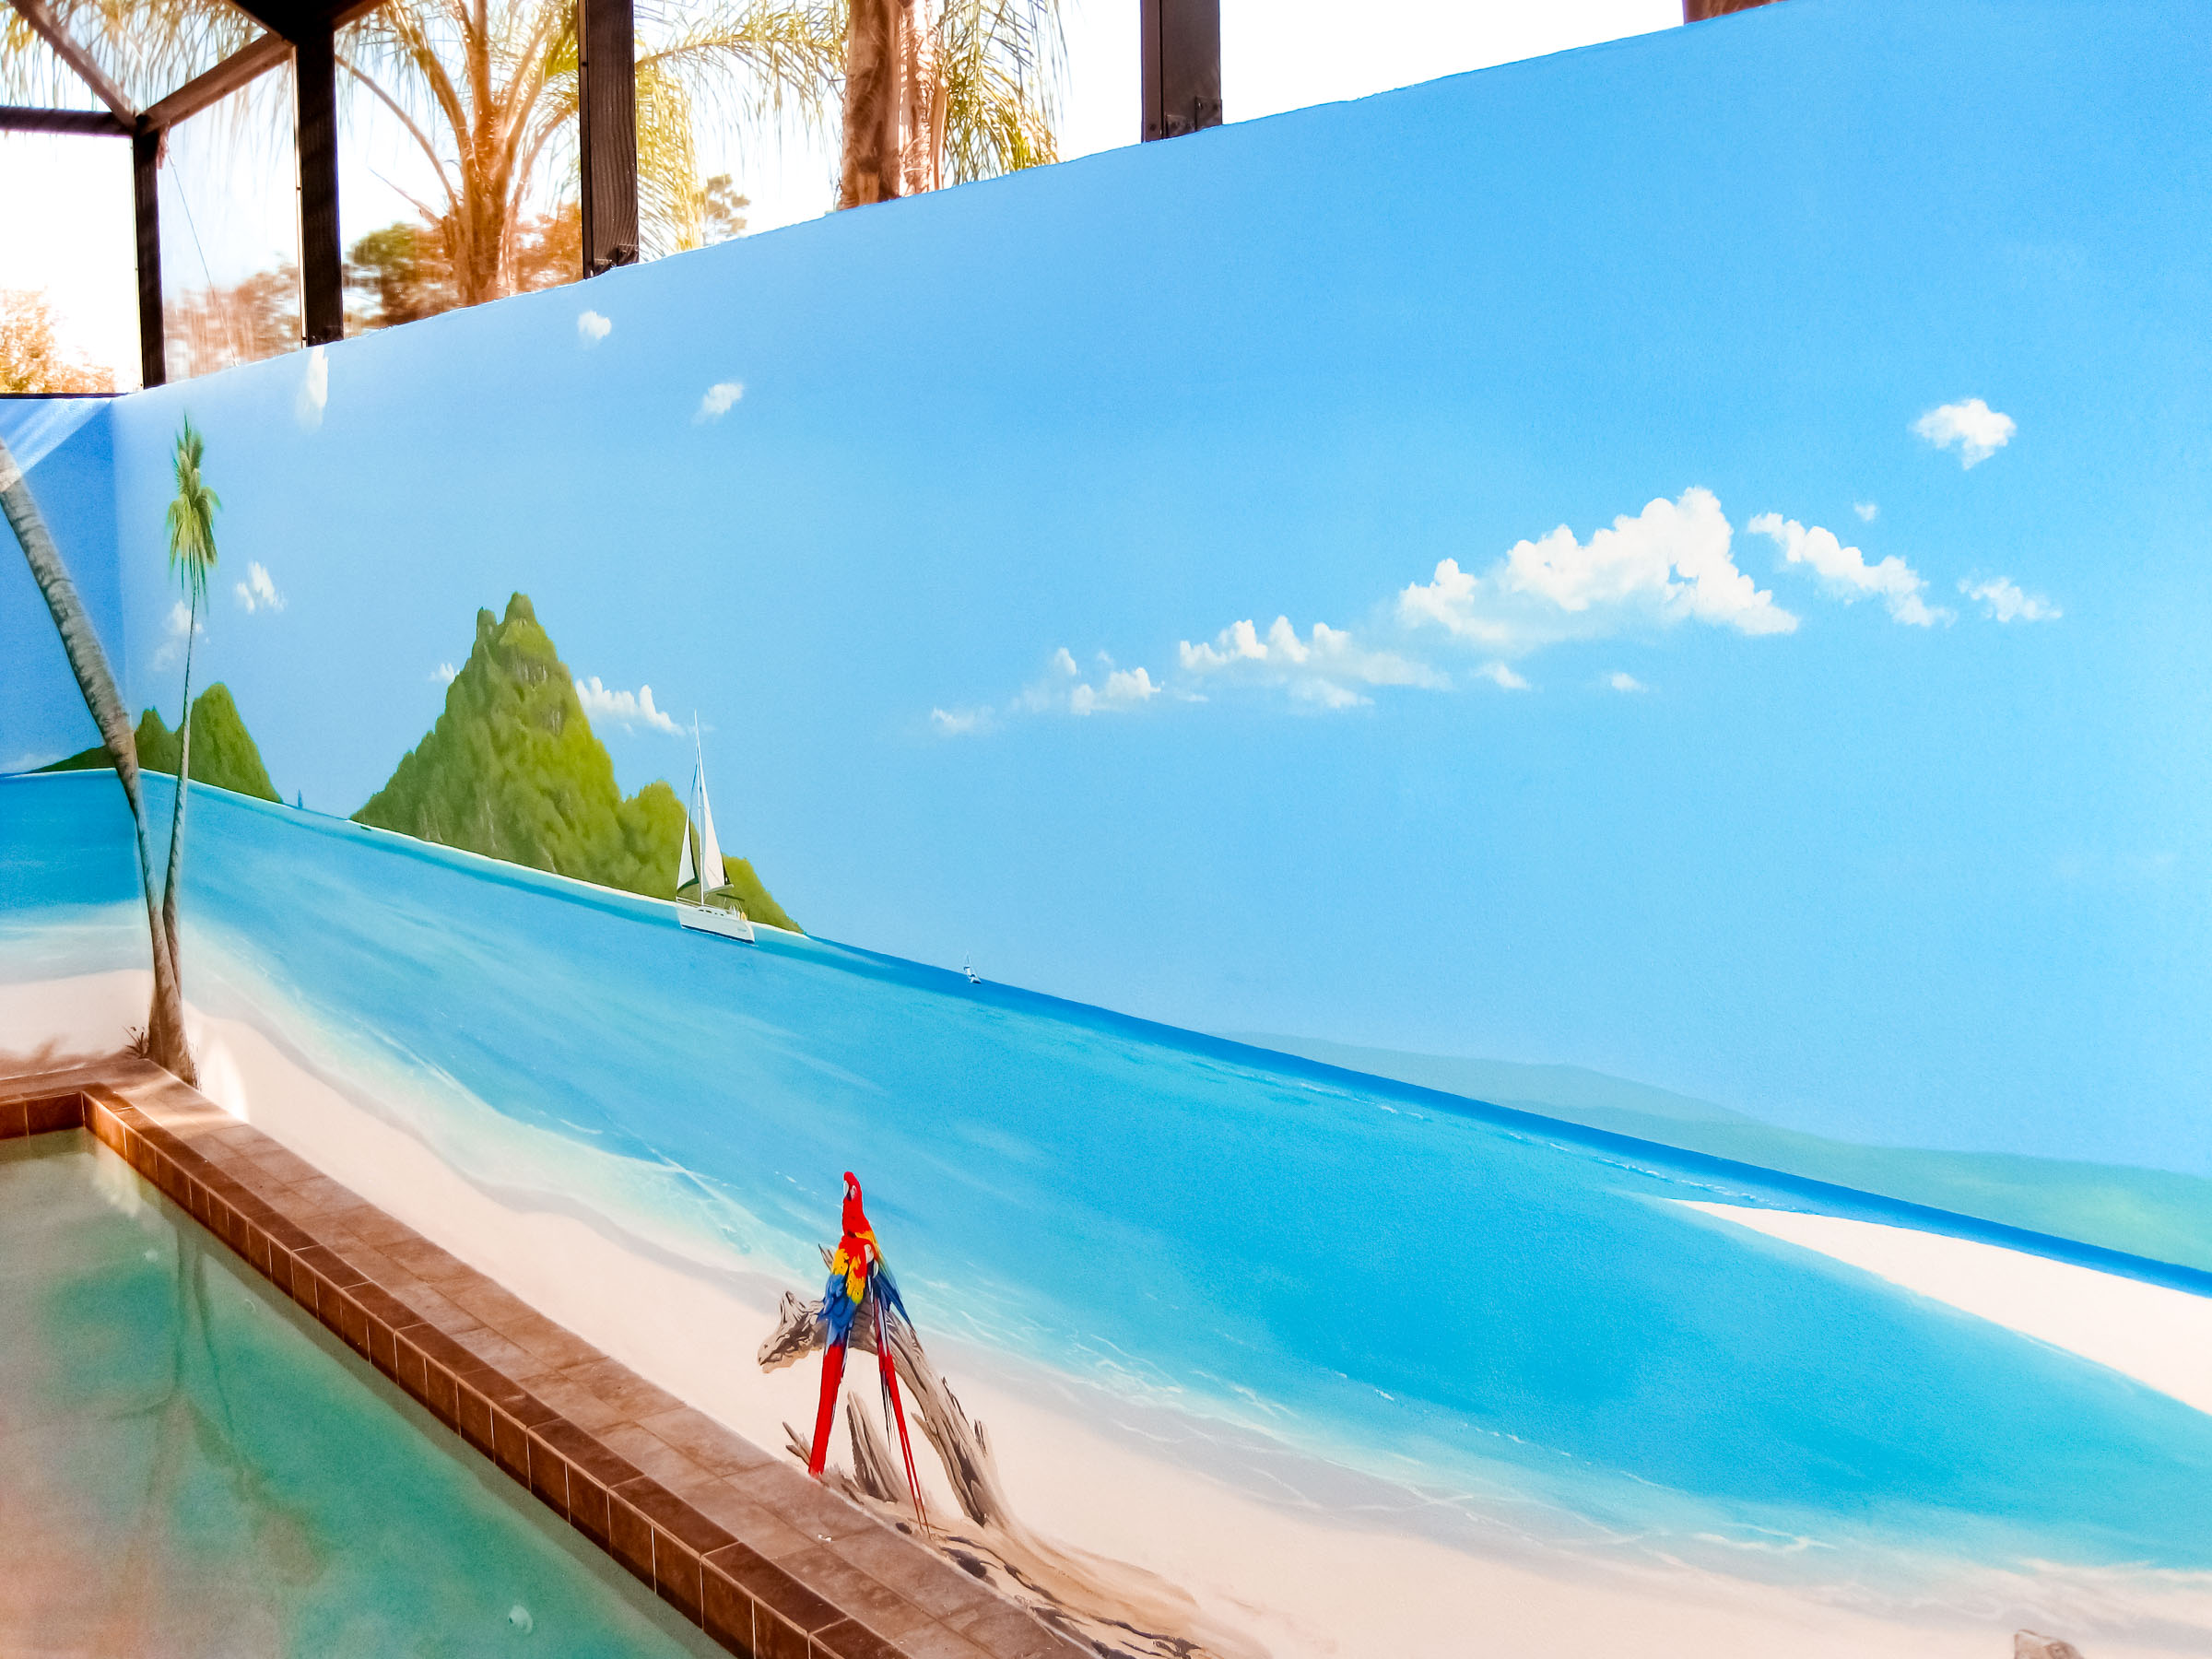 beach-scene-swimming-pool-mural